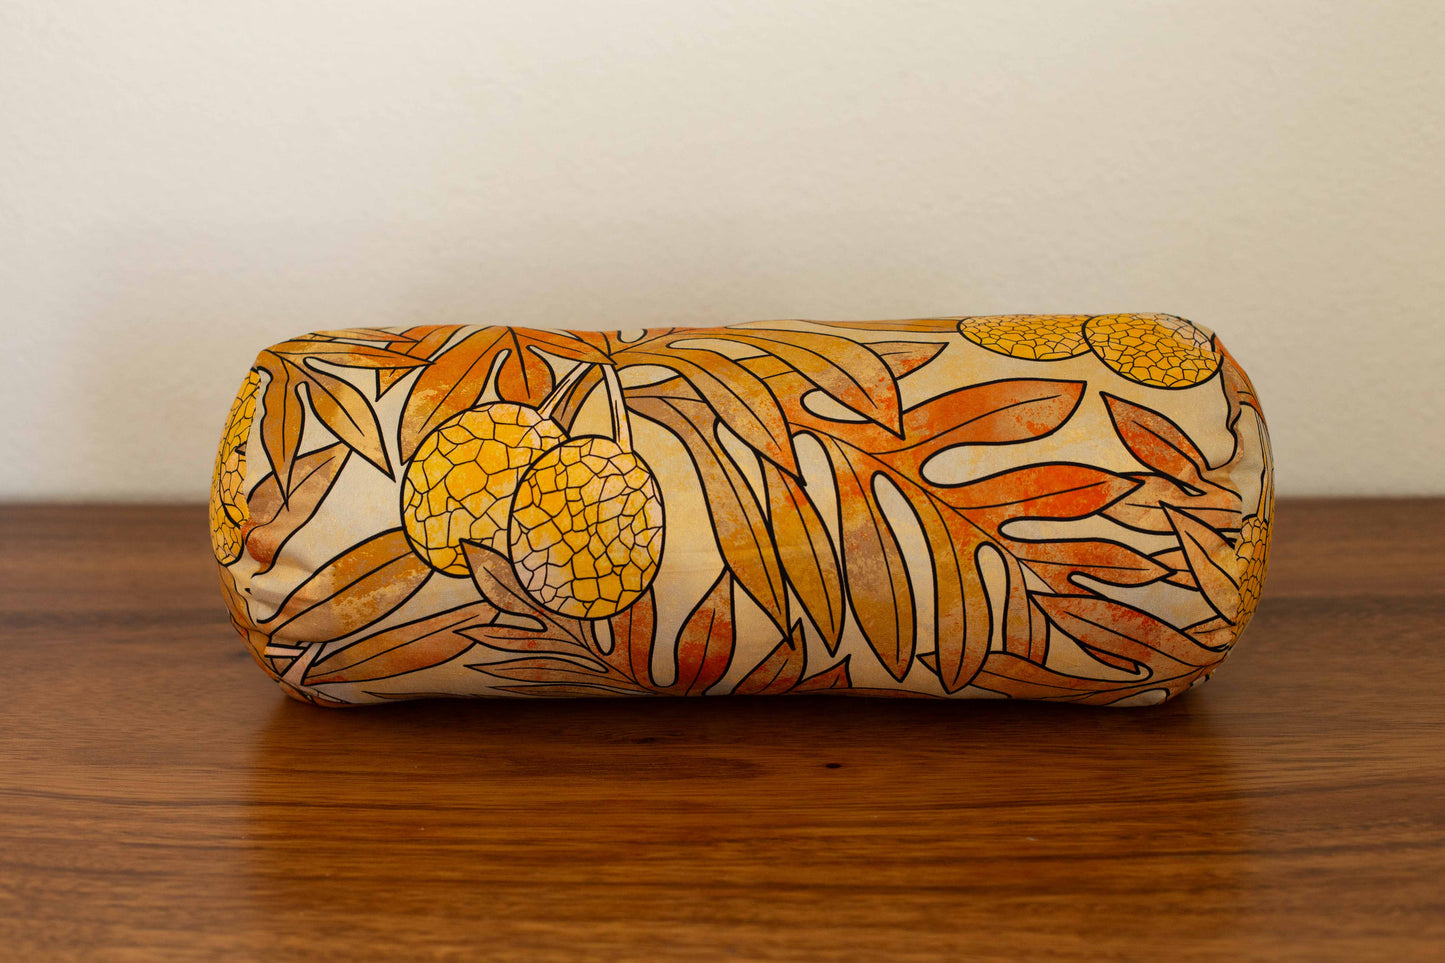 PDF Sewing Pattern - Uluna Hooluolu (Comfort Pillow)